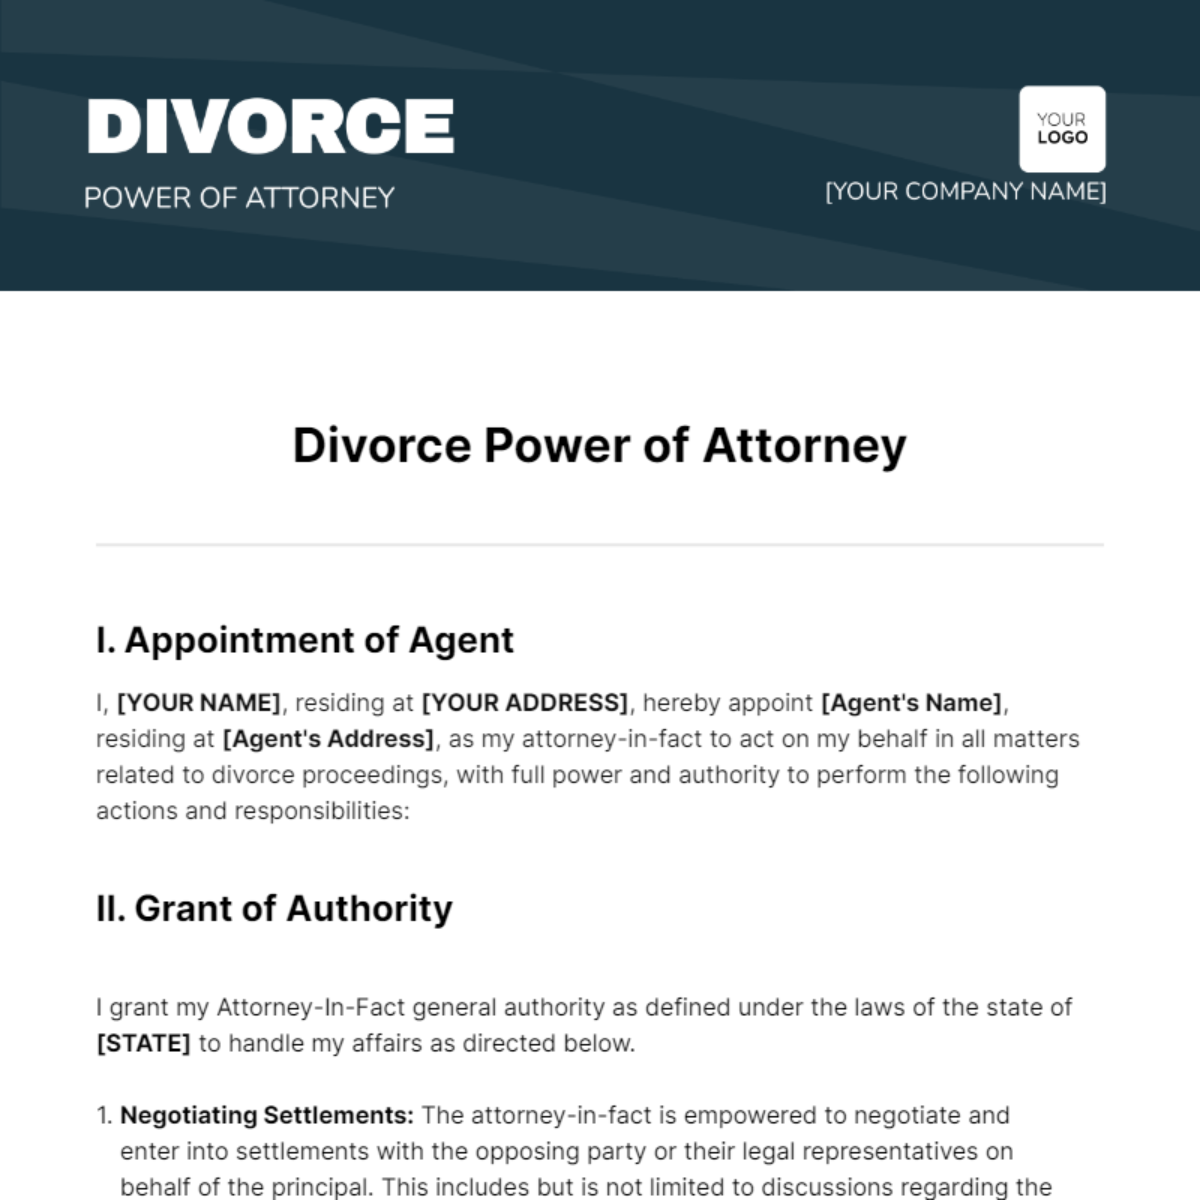 Divorce Power of Attorney Template